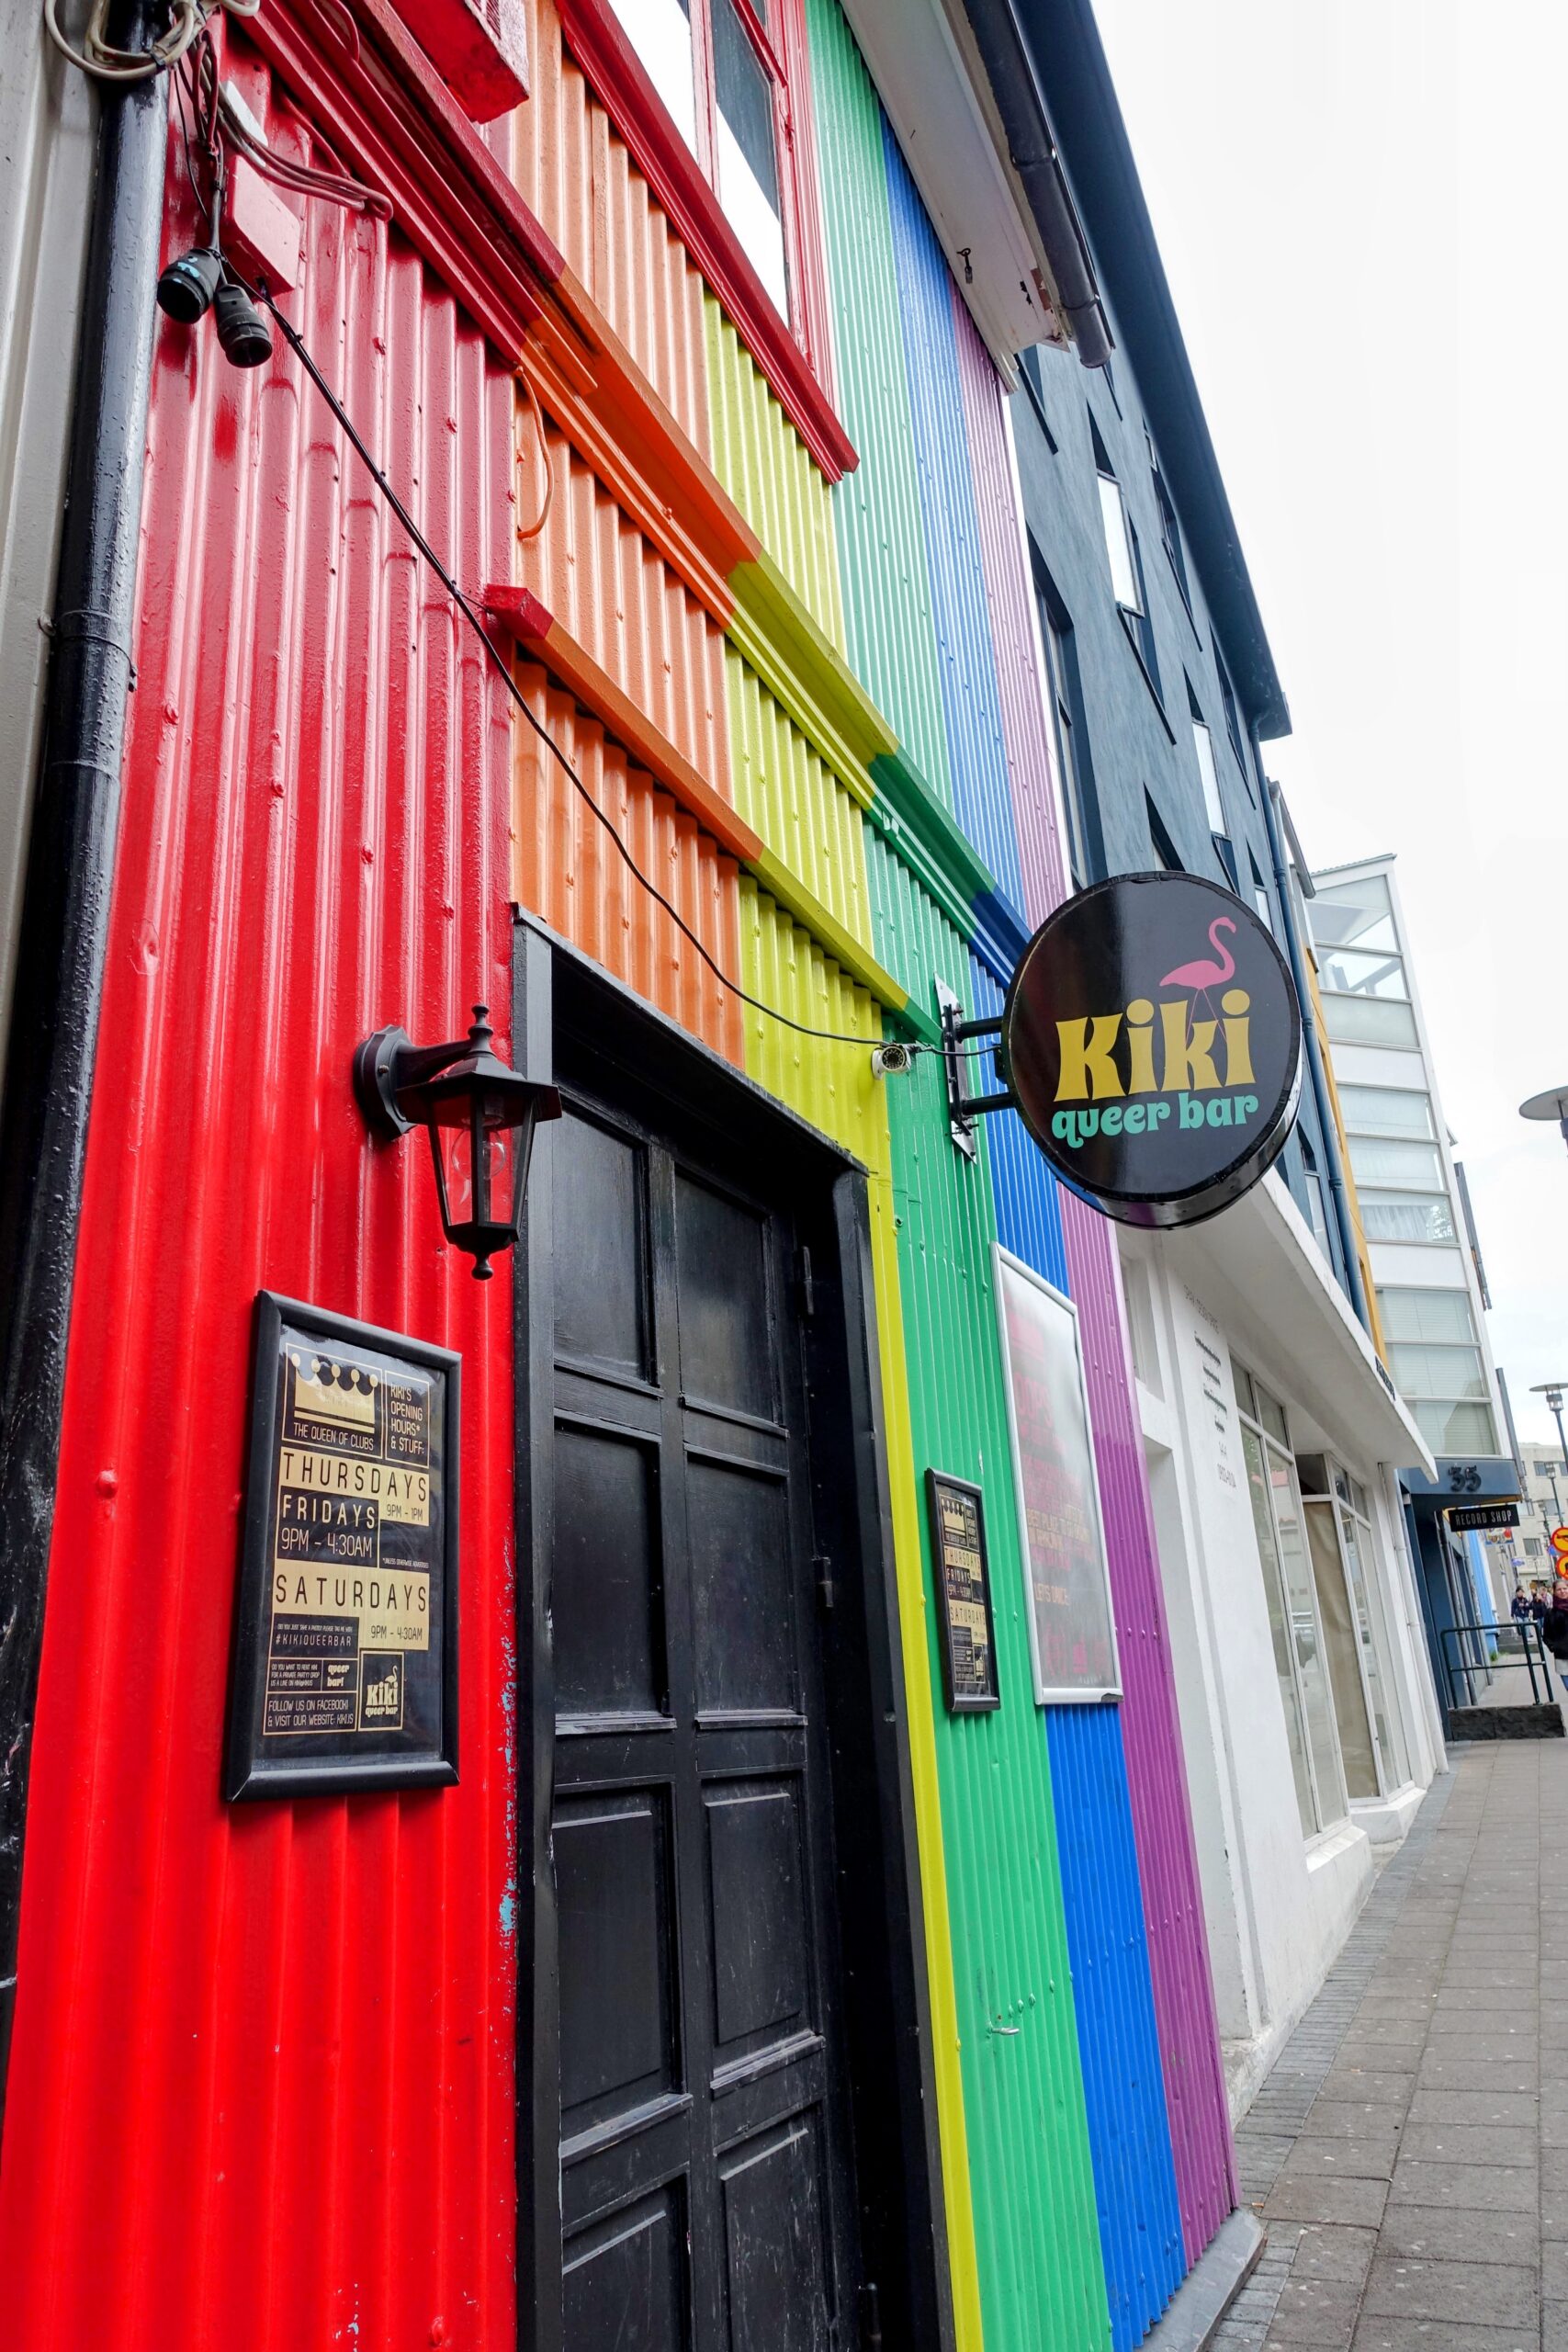 Kiki Queen Bar (Photo Credit: Chris Campbell)